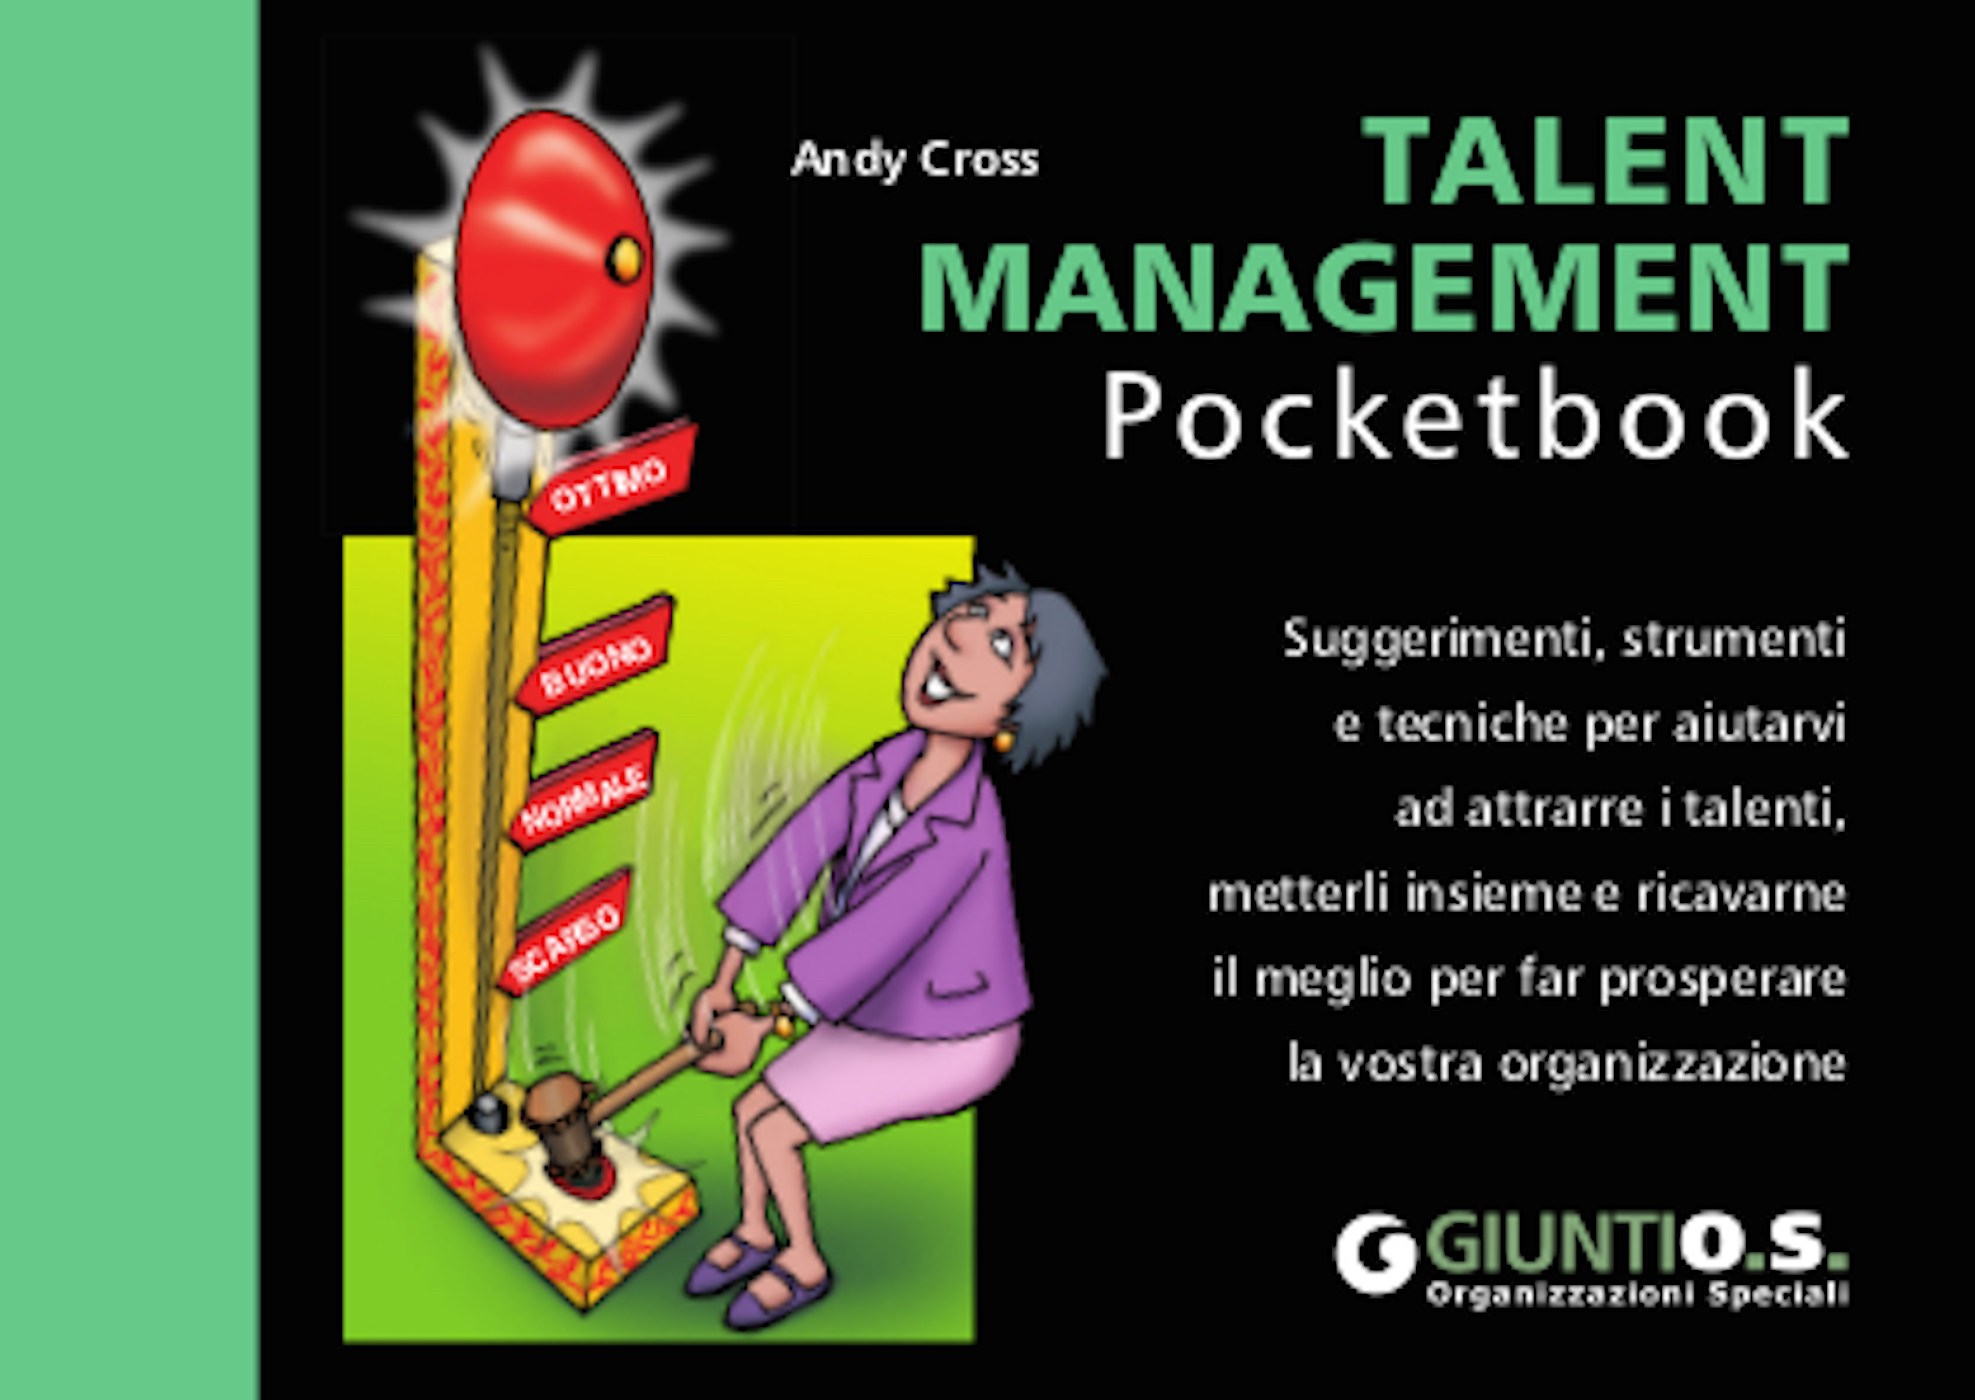 Talent management - Andy Cross